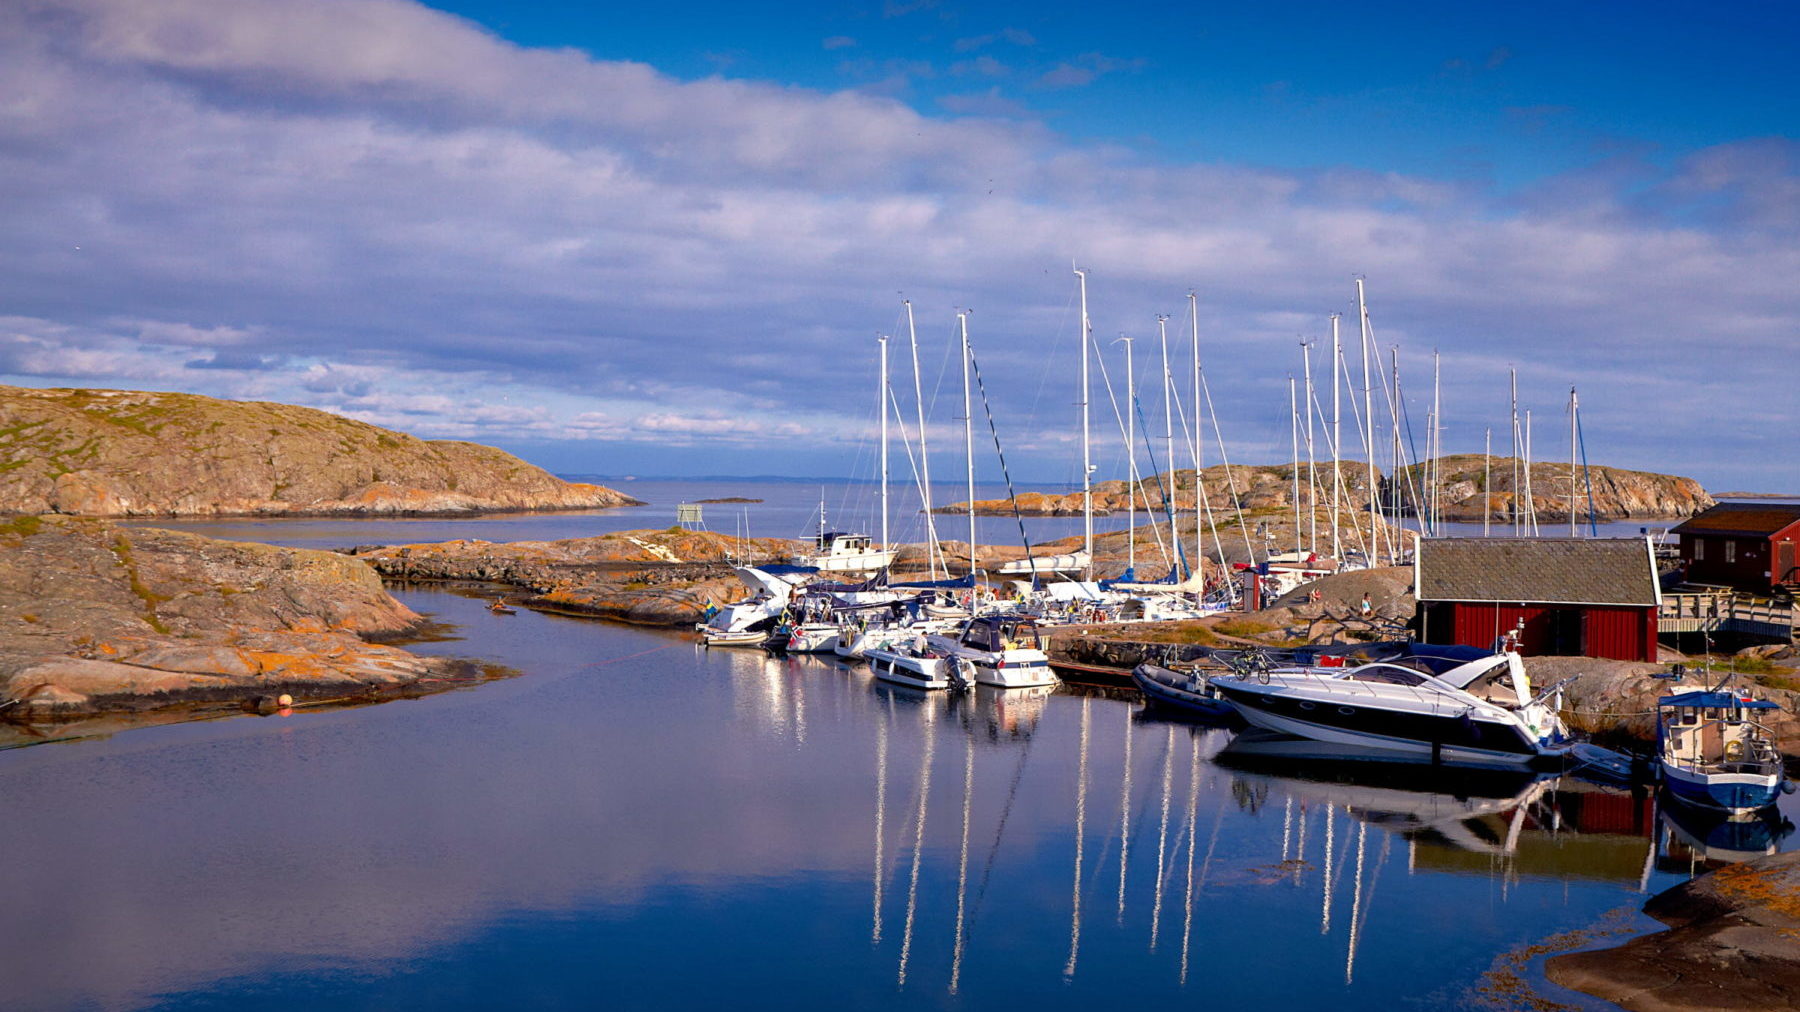 Väderöarna, lungo la costa della Svezia occidentale, fotografata da Jonas Ingman